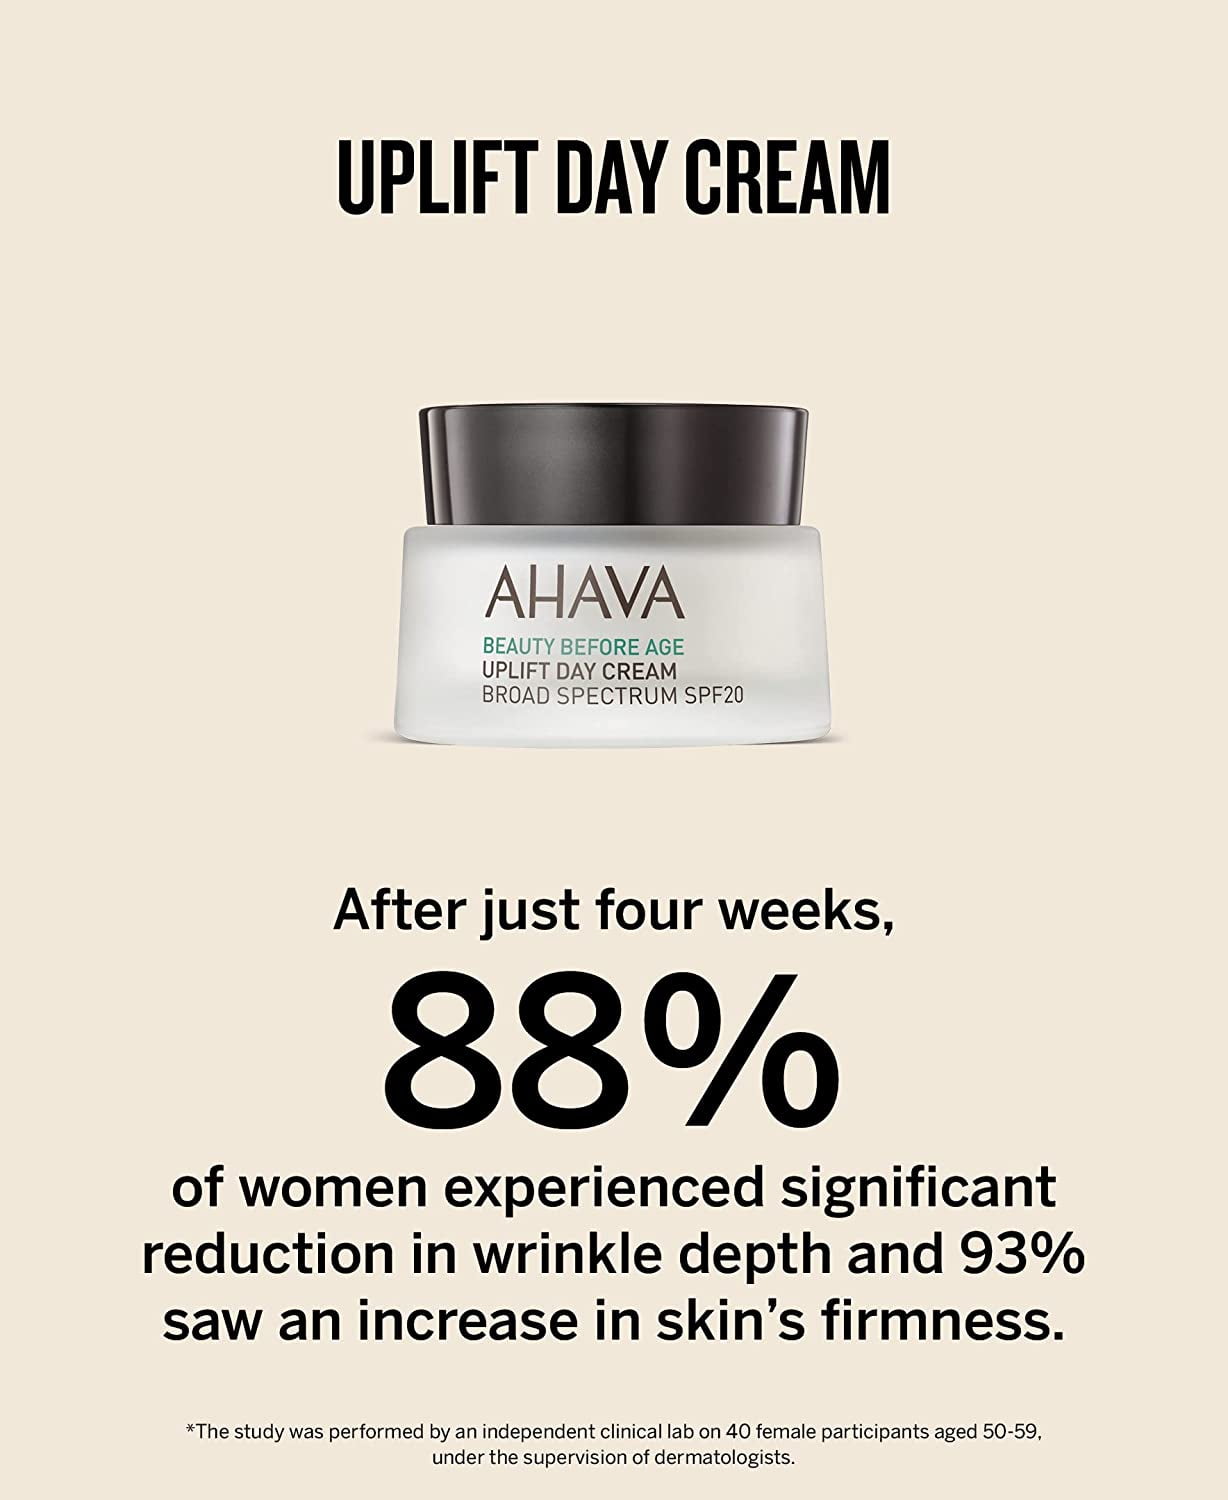 AHAVA - Beauty Before Age Uplift Day Cream Broad Spectrum SPF20 1.7 oz.